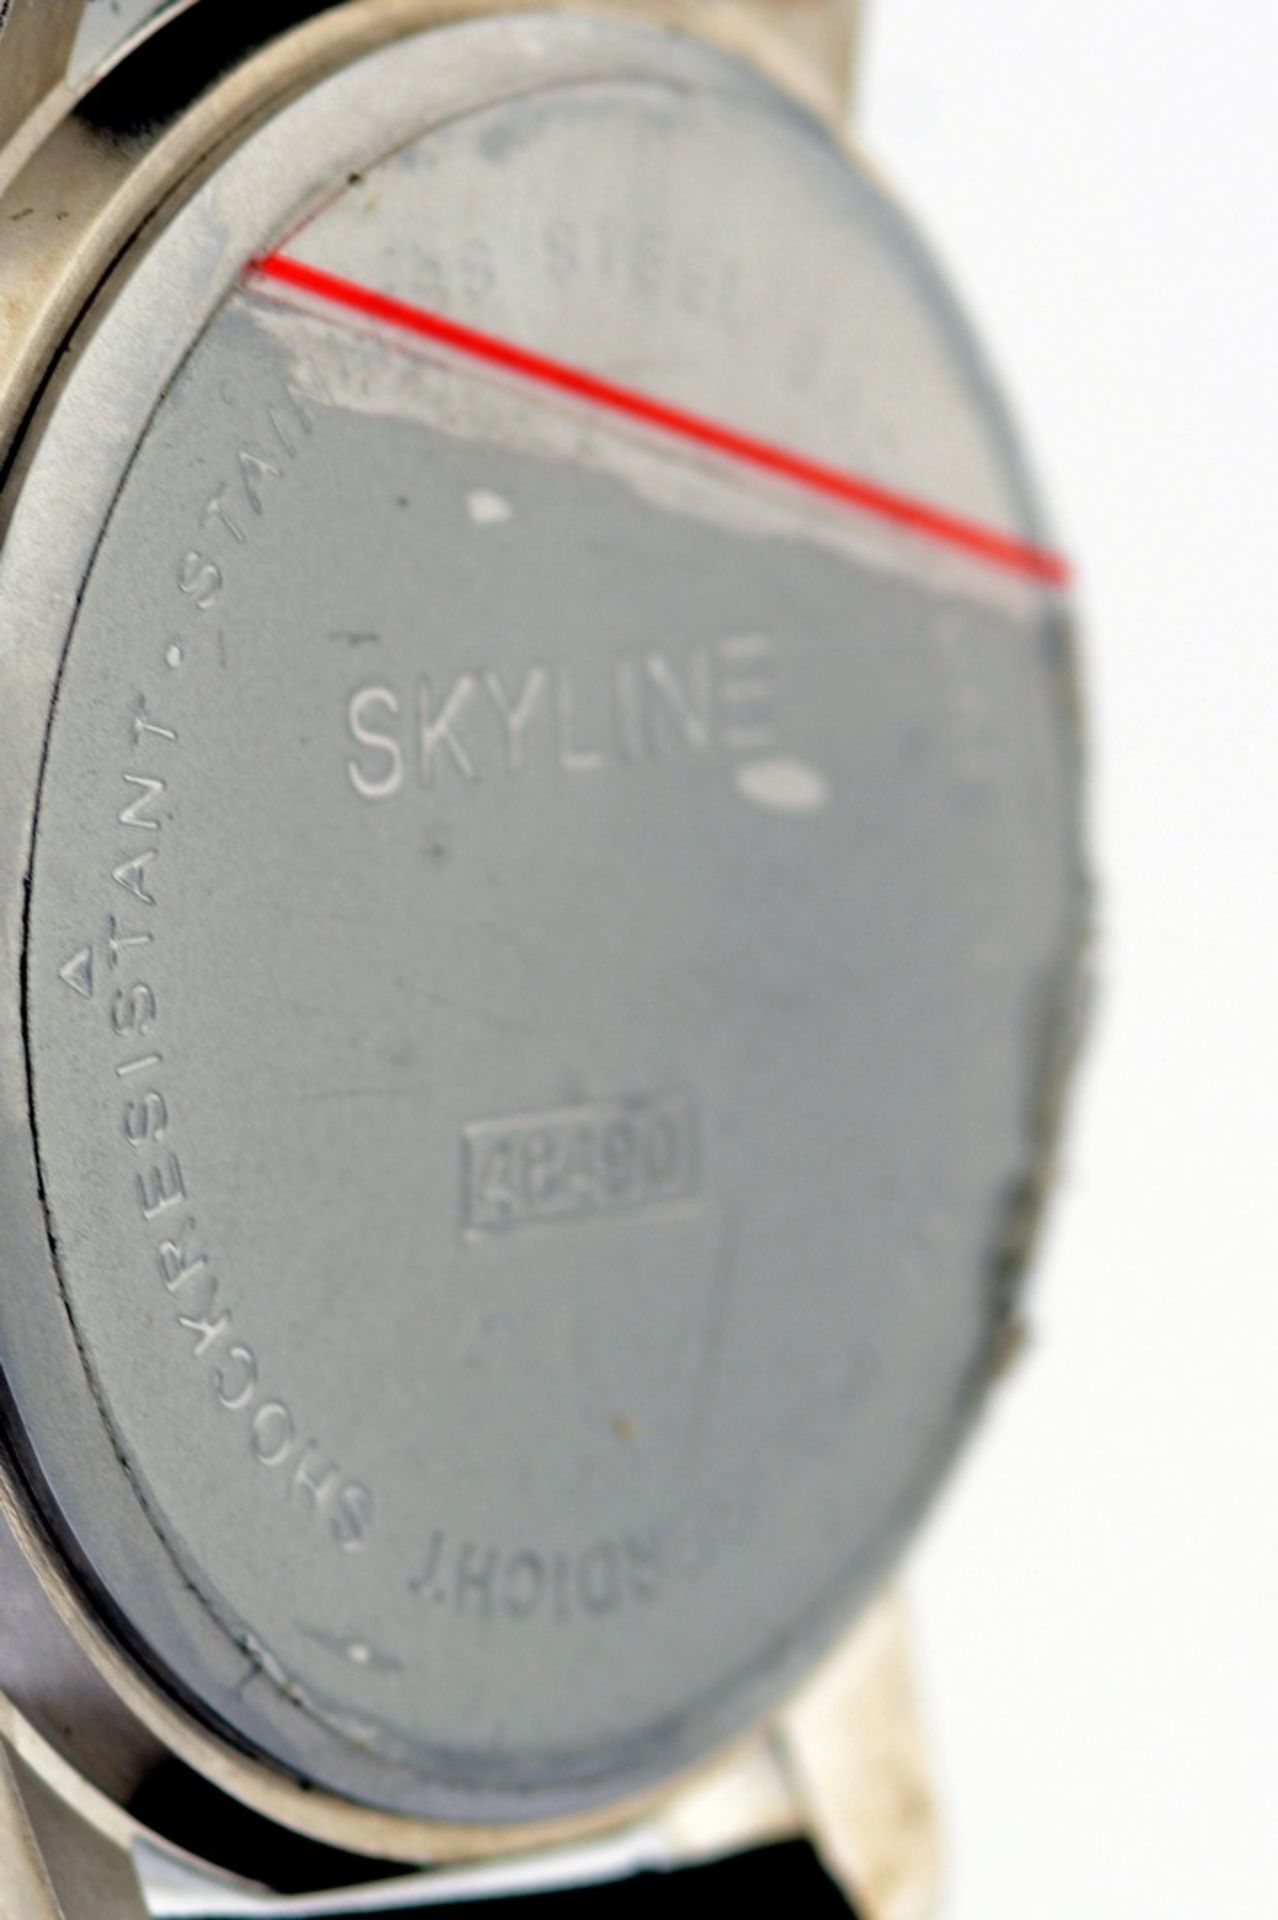 Mondaine / SKYLINE Chronograph Date - (Unworn) Gentlmen's Steel Wrist Watch - Image 6 of 8